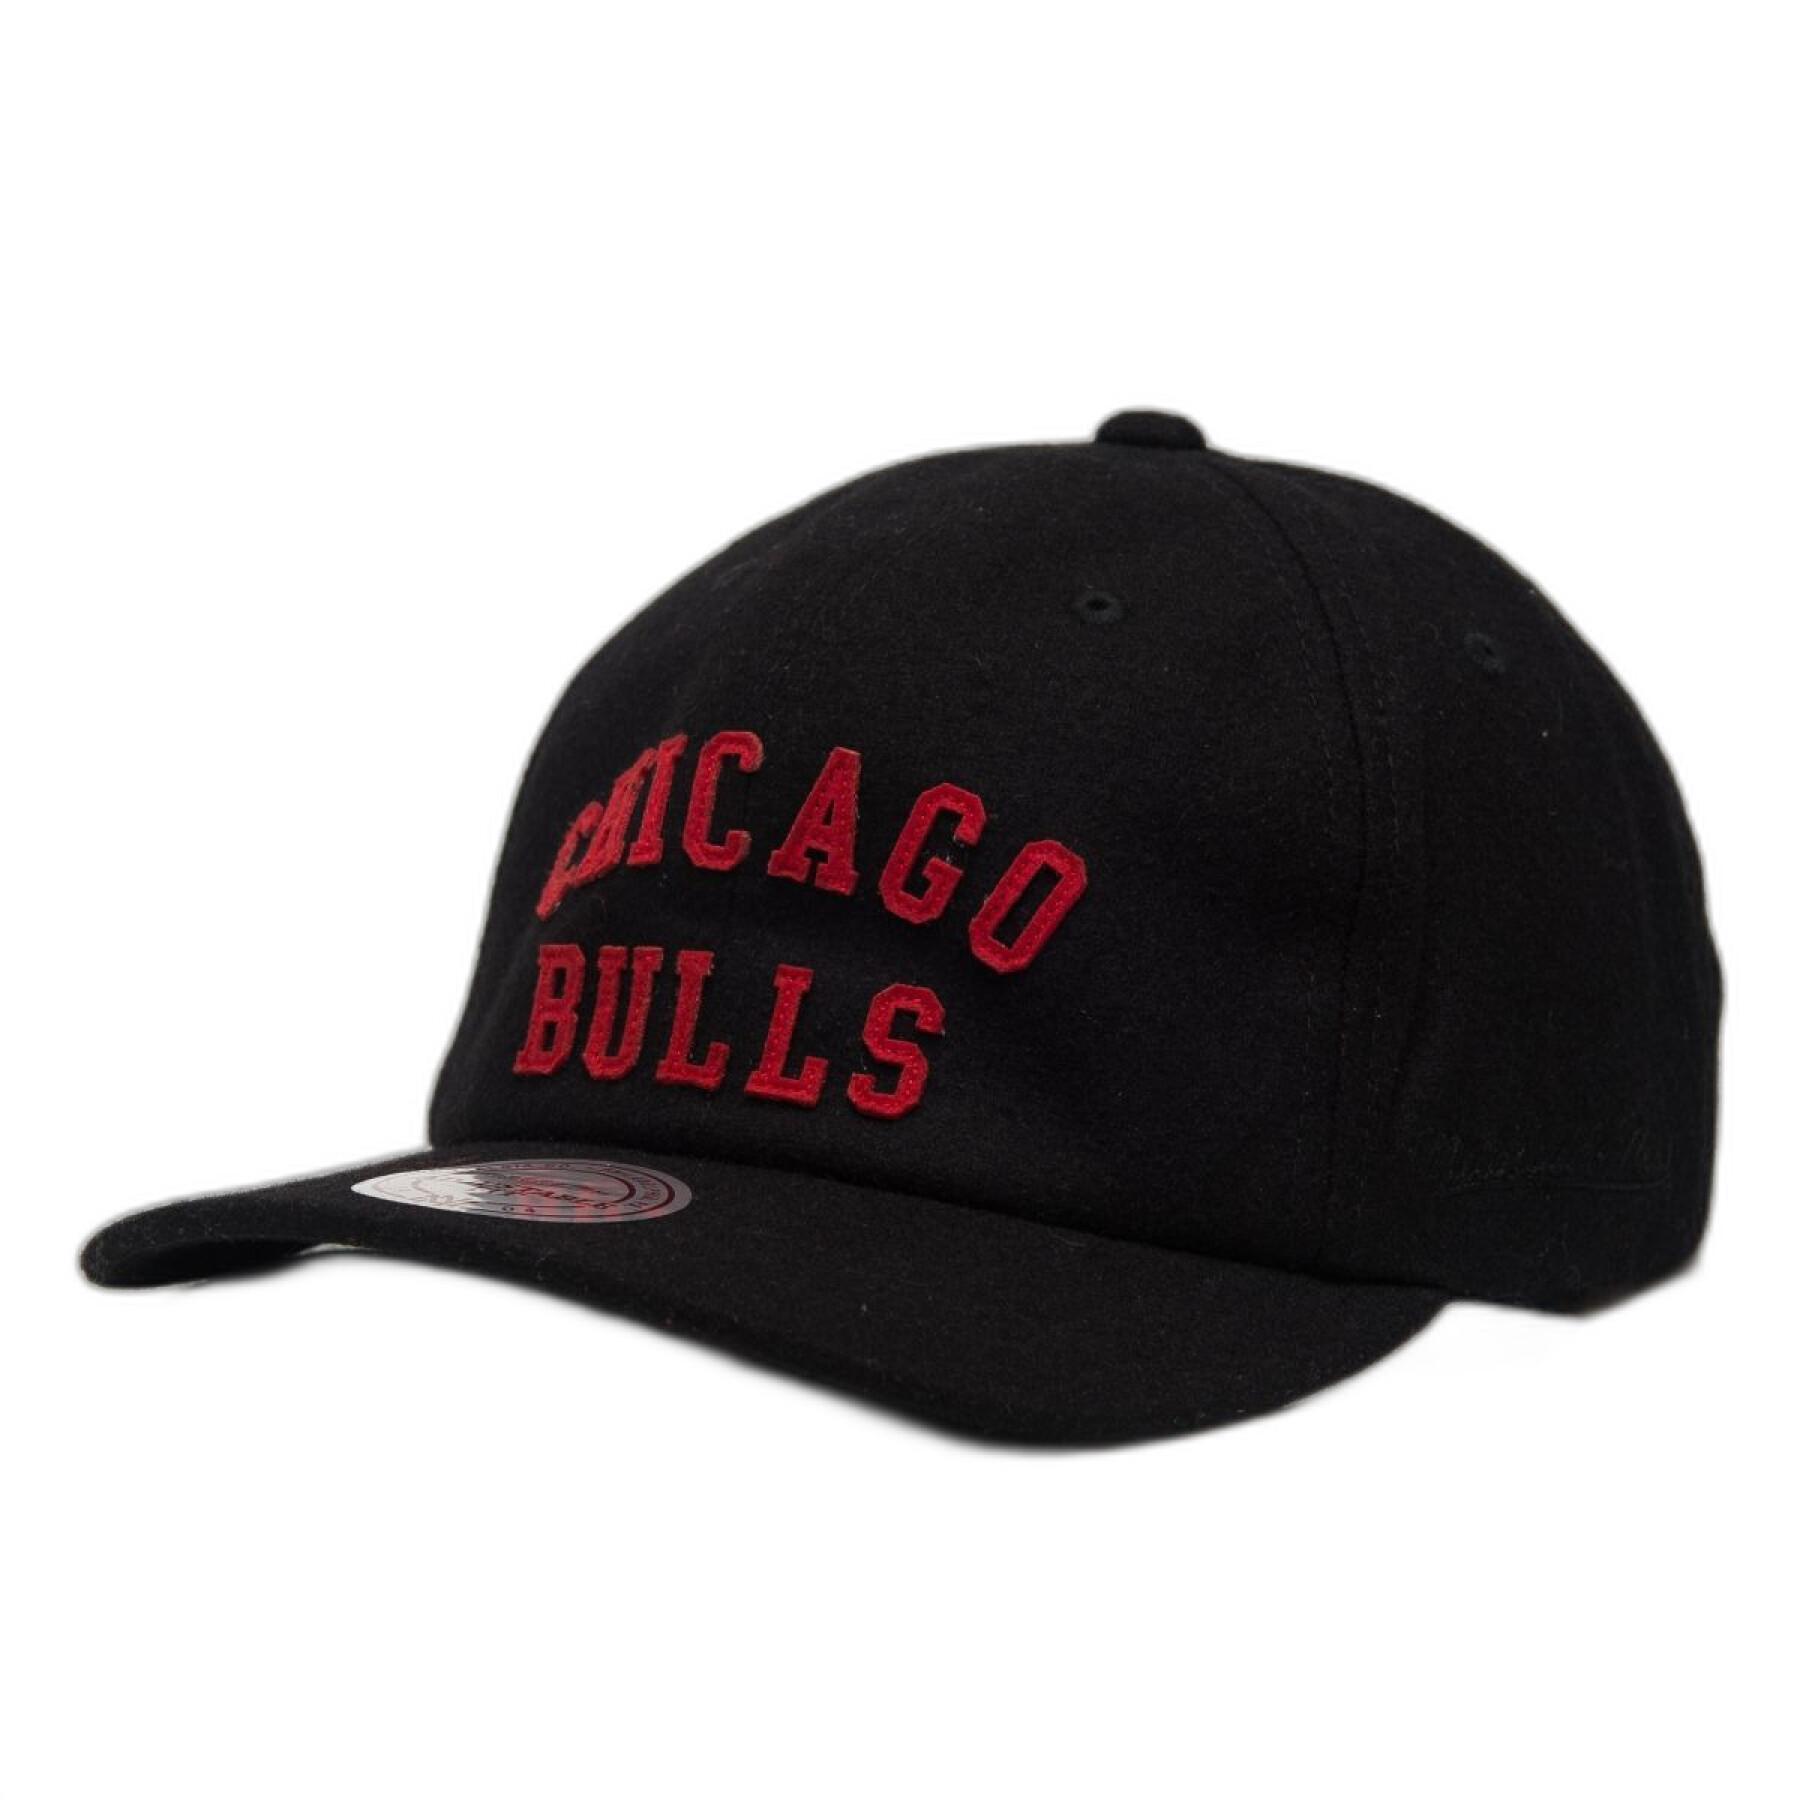 Czapka Chicago Bulls hwc felt arch strapback